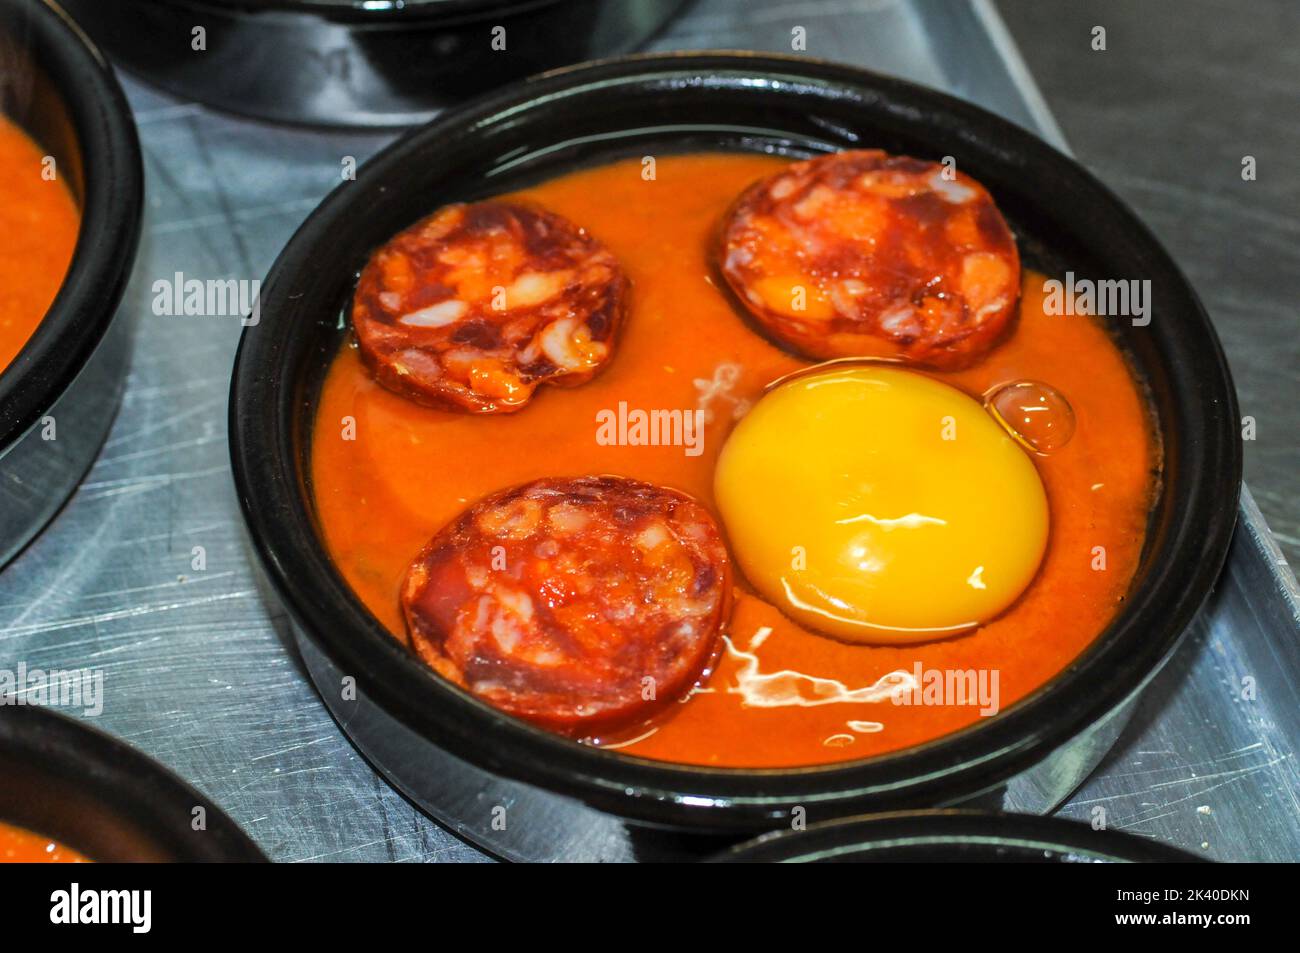 Eggs Flamenca - Eggs poached in tomato sauce. Stock Photo